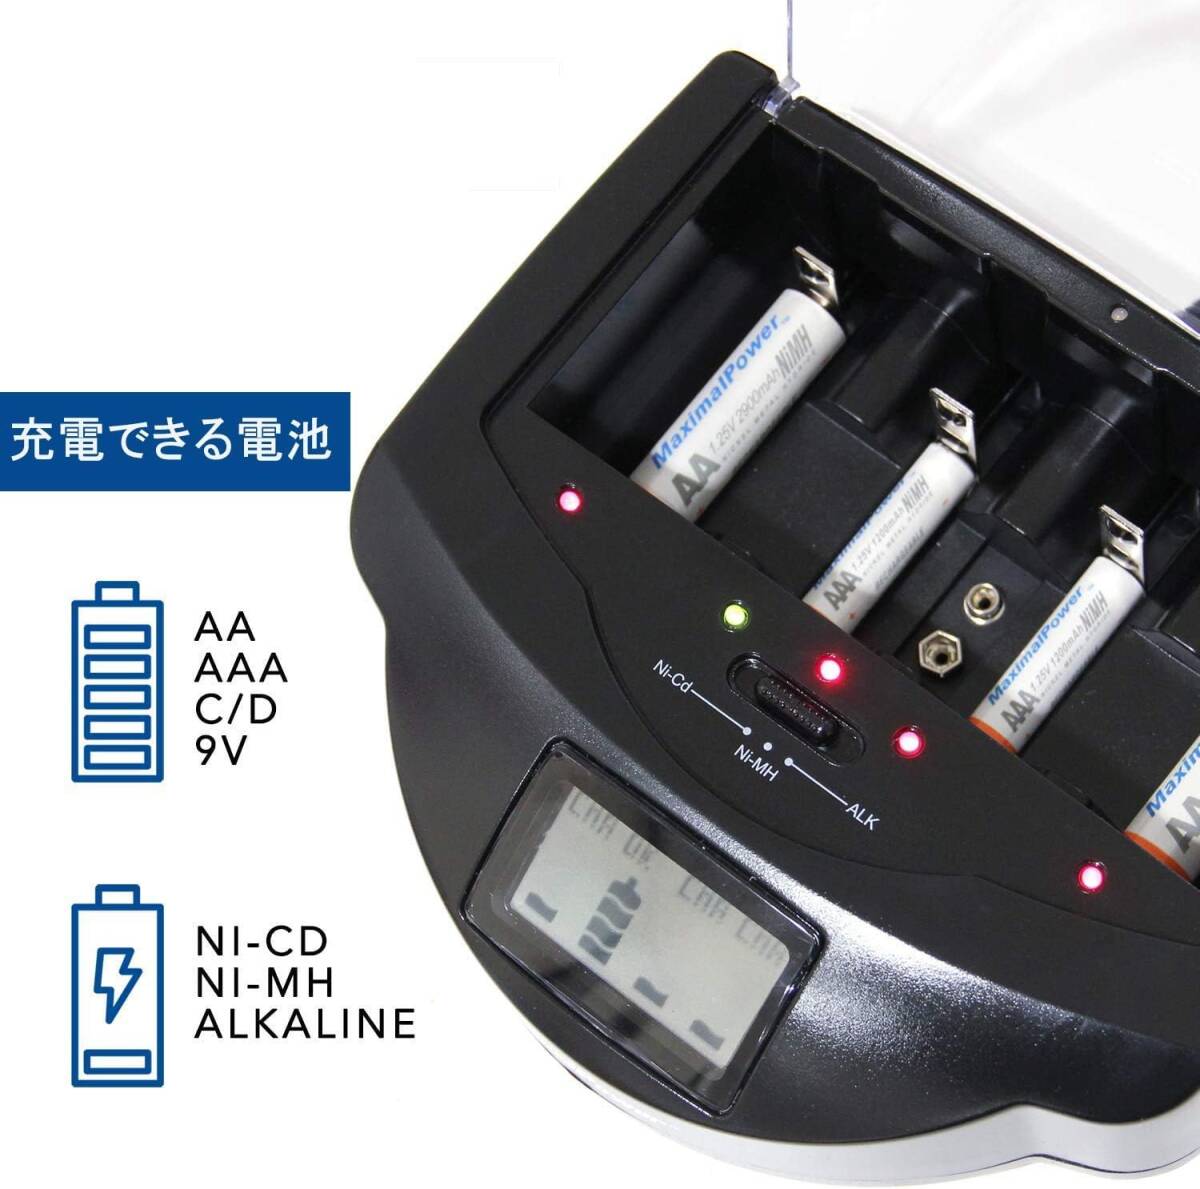  black battery charger alkali nickel water element nikado battery charger single 1, single 2, single 3, single 4,9V rechargeable battery charger disposable repeated use multi 